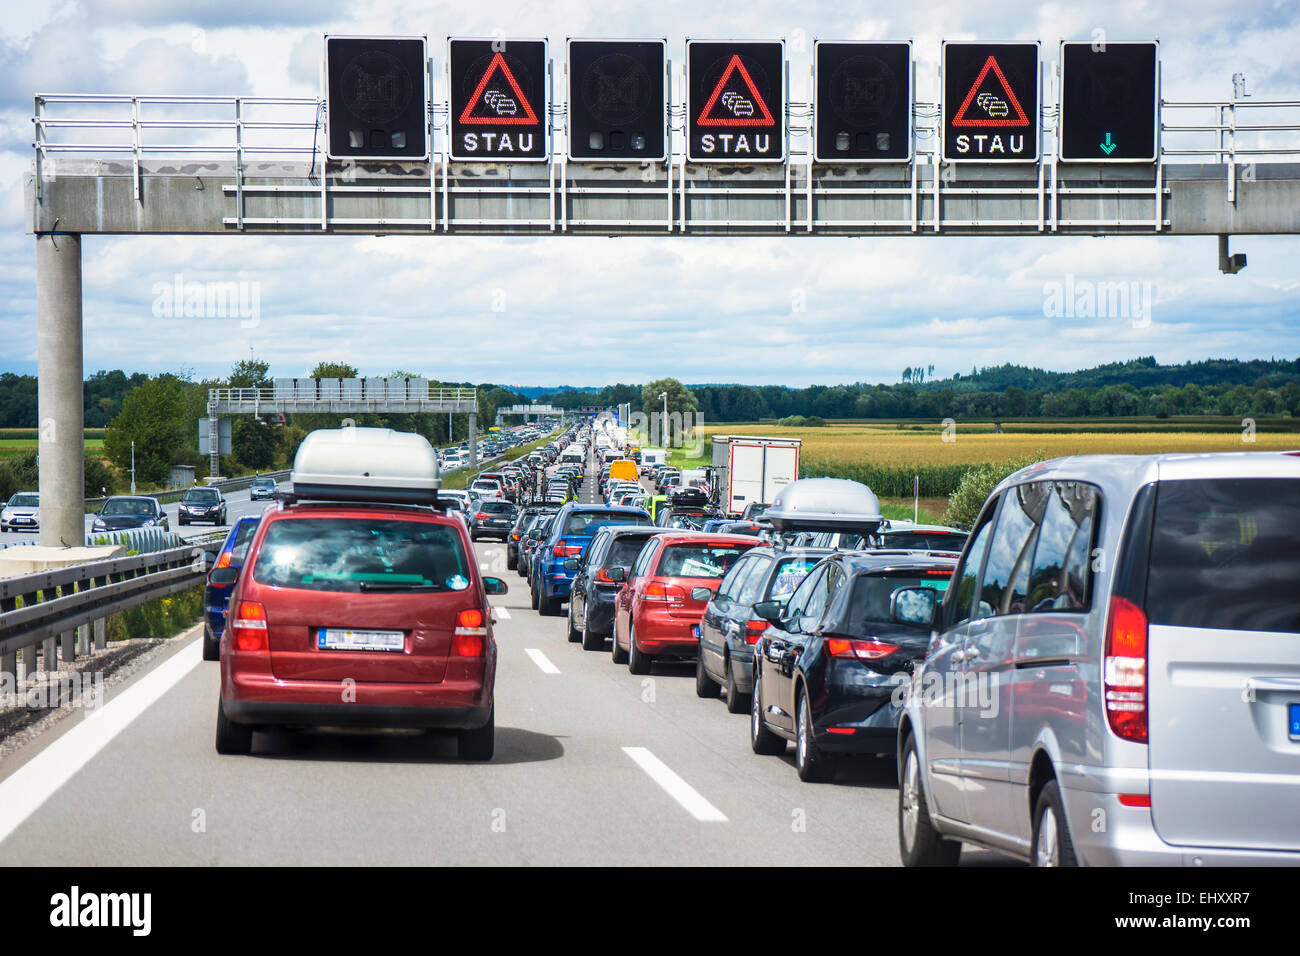 Germany, Bavaria, Traffic jam on A9 highway between Munich and Nuremberg Stock Photo